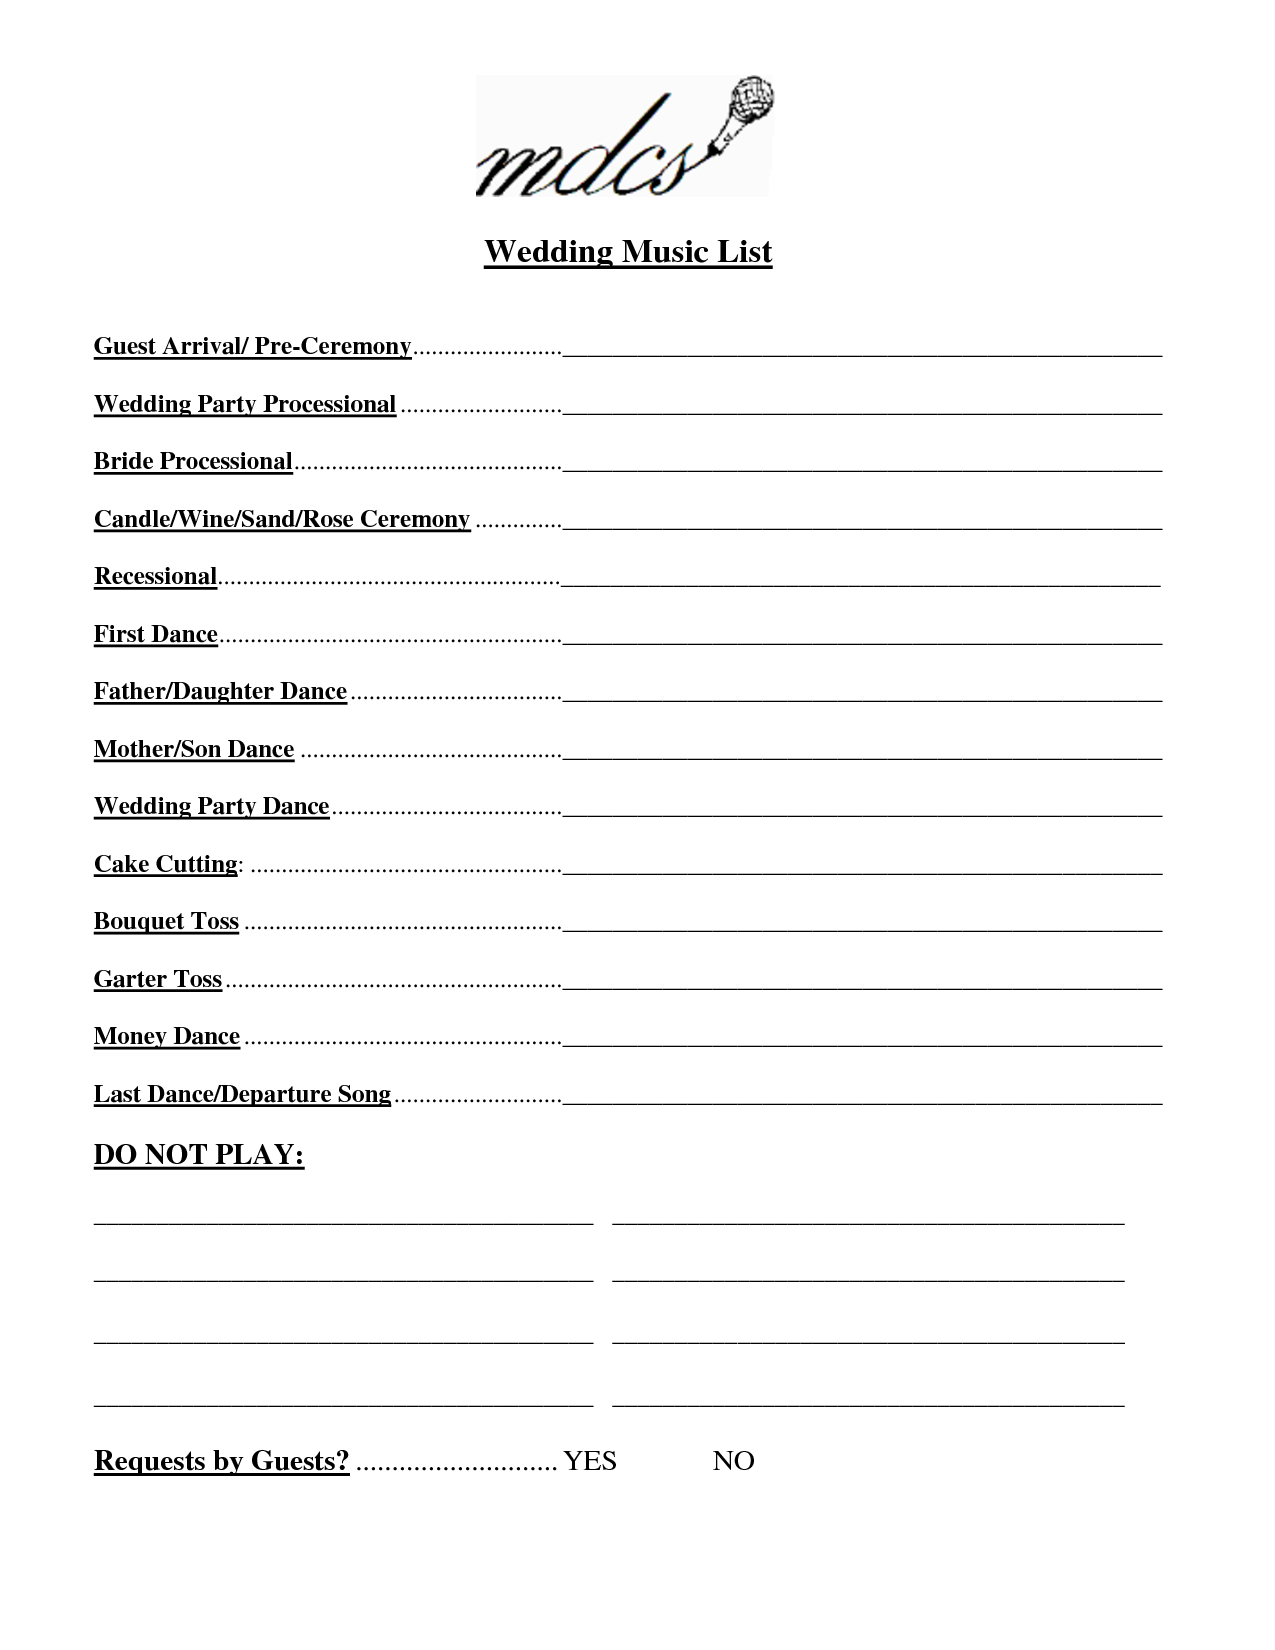 Wedding Party List Template Free | Fosterhaley Wedding Music List - Free Printable Wedding Party List